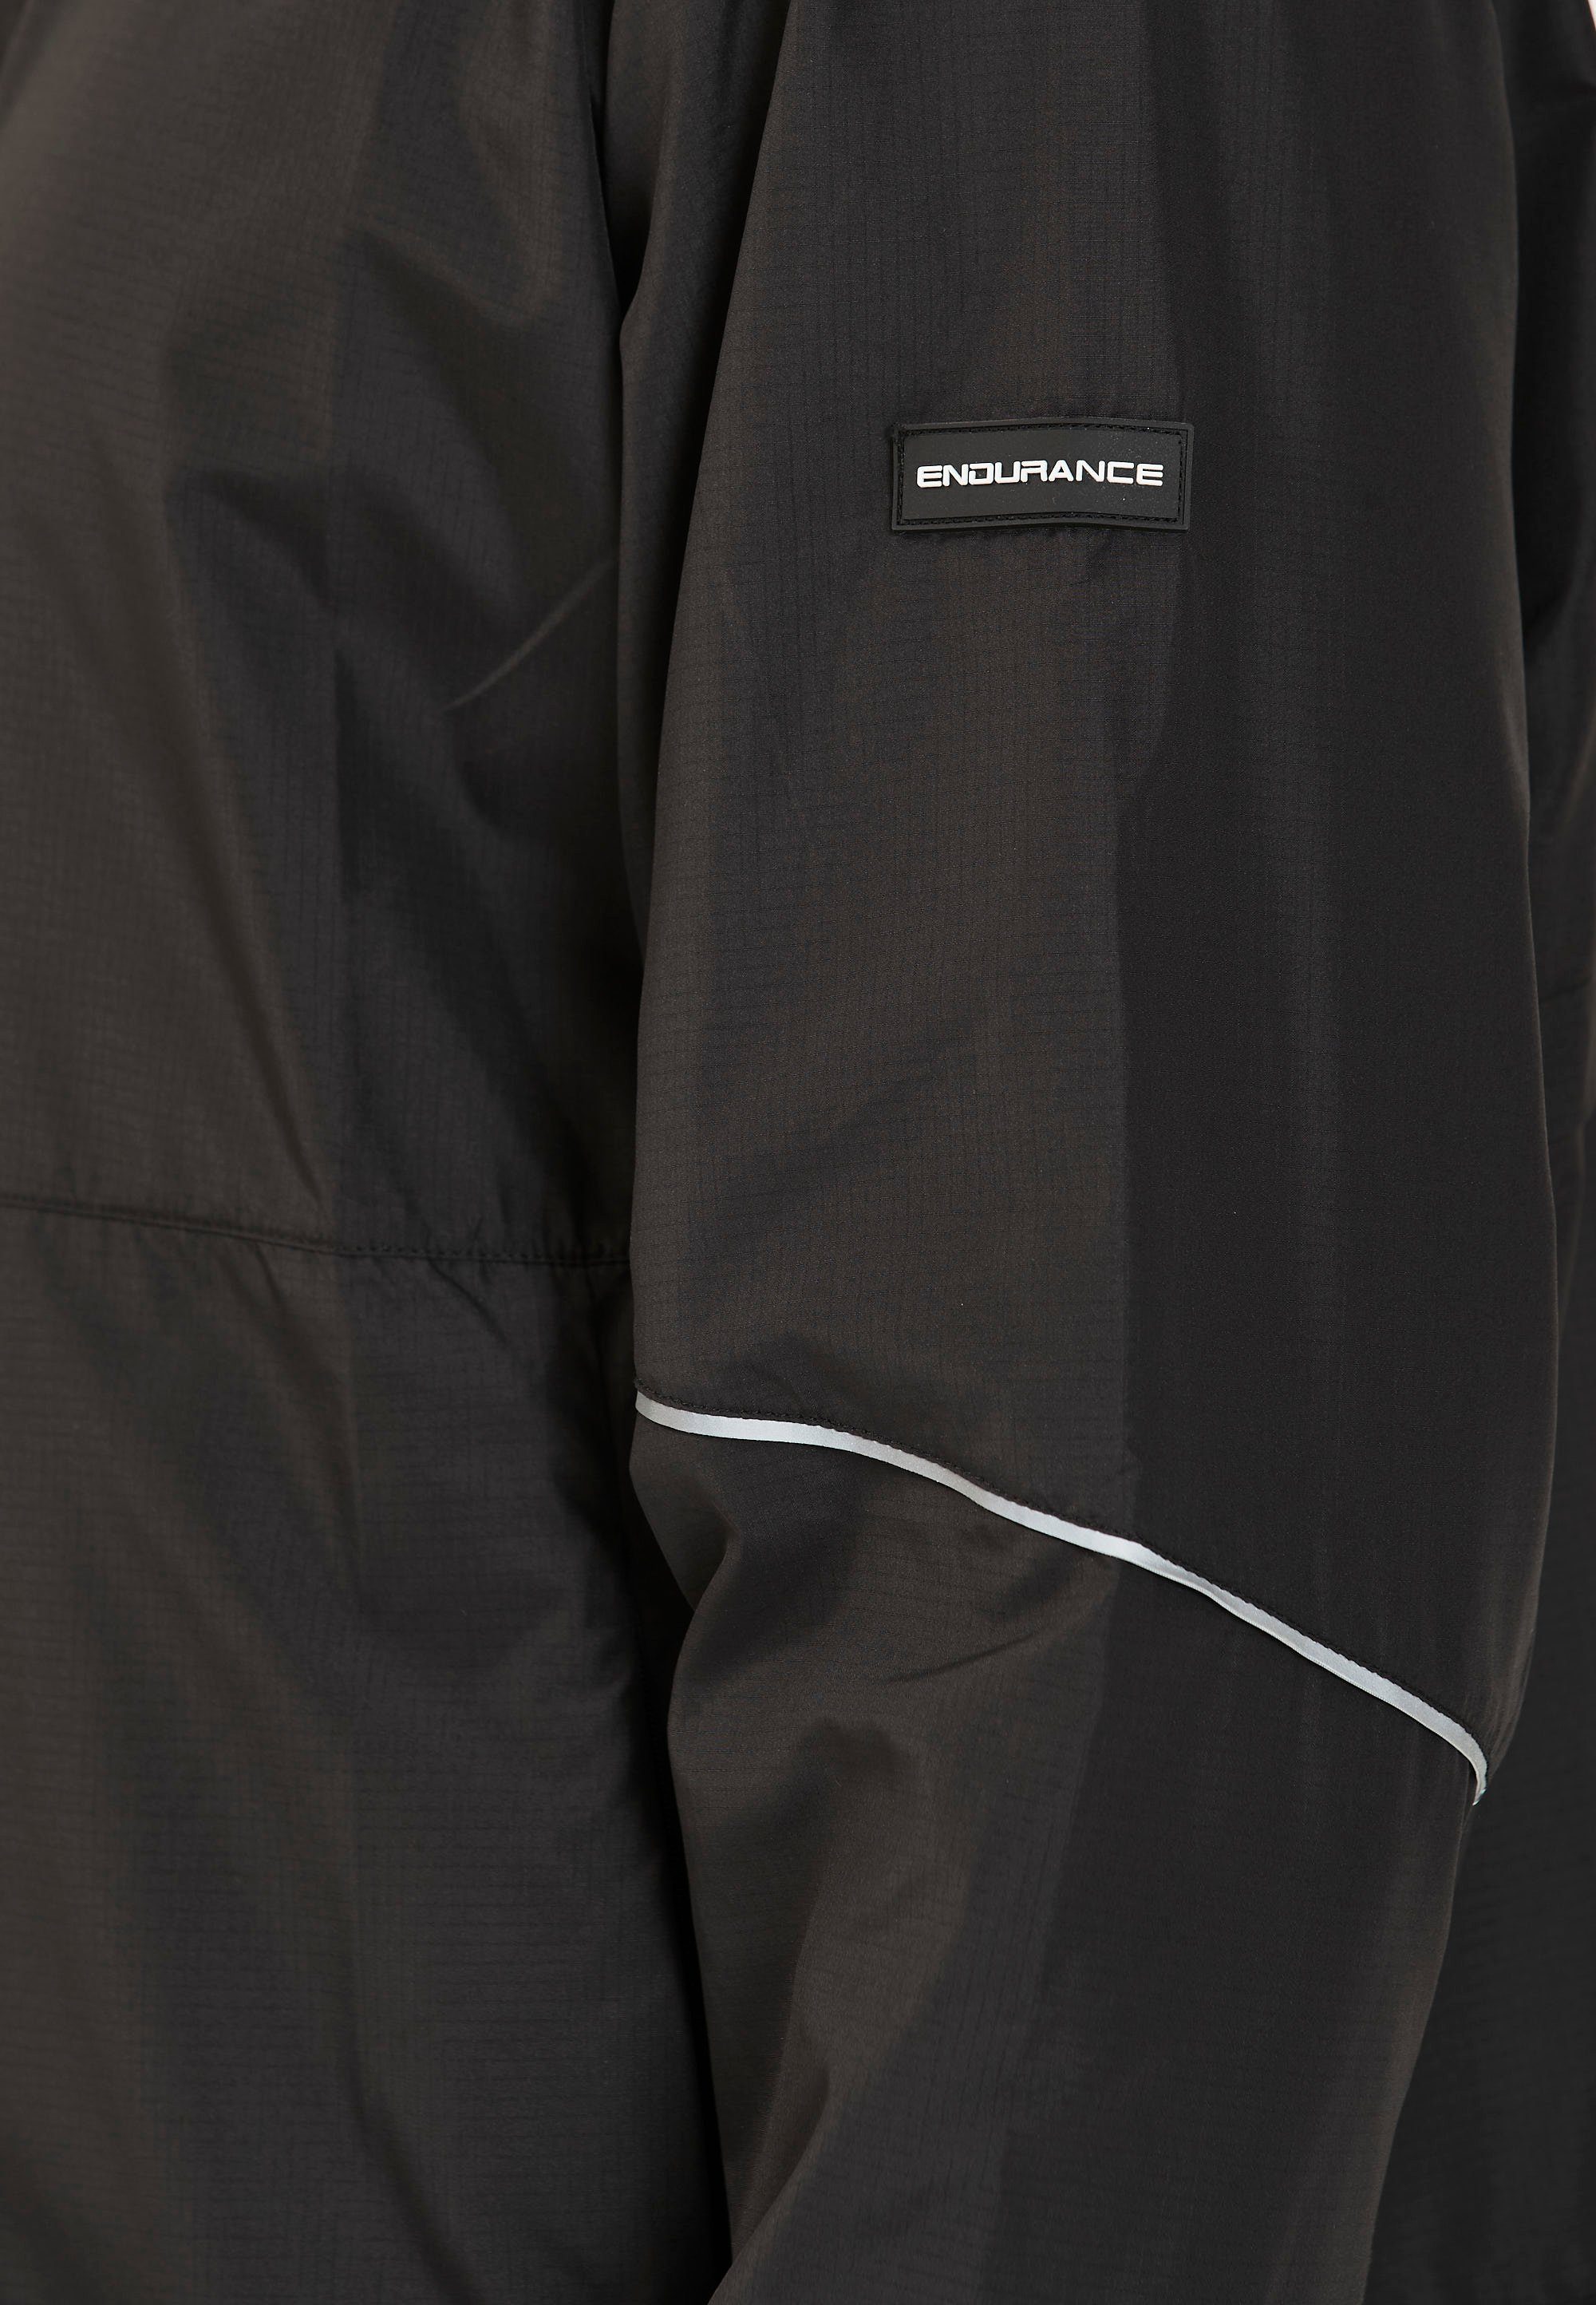 ENDURANCE Laufjacke NOVANT reflektierenden Details Jacket Functional mit M schwarz